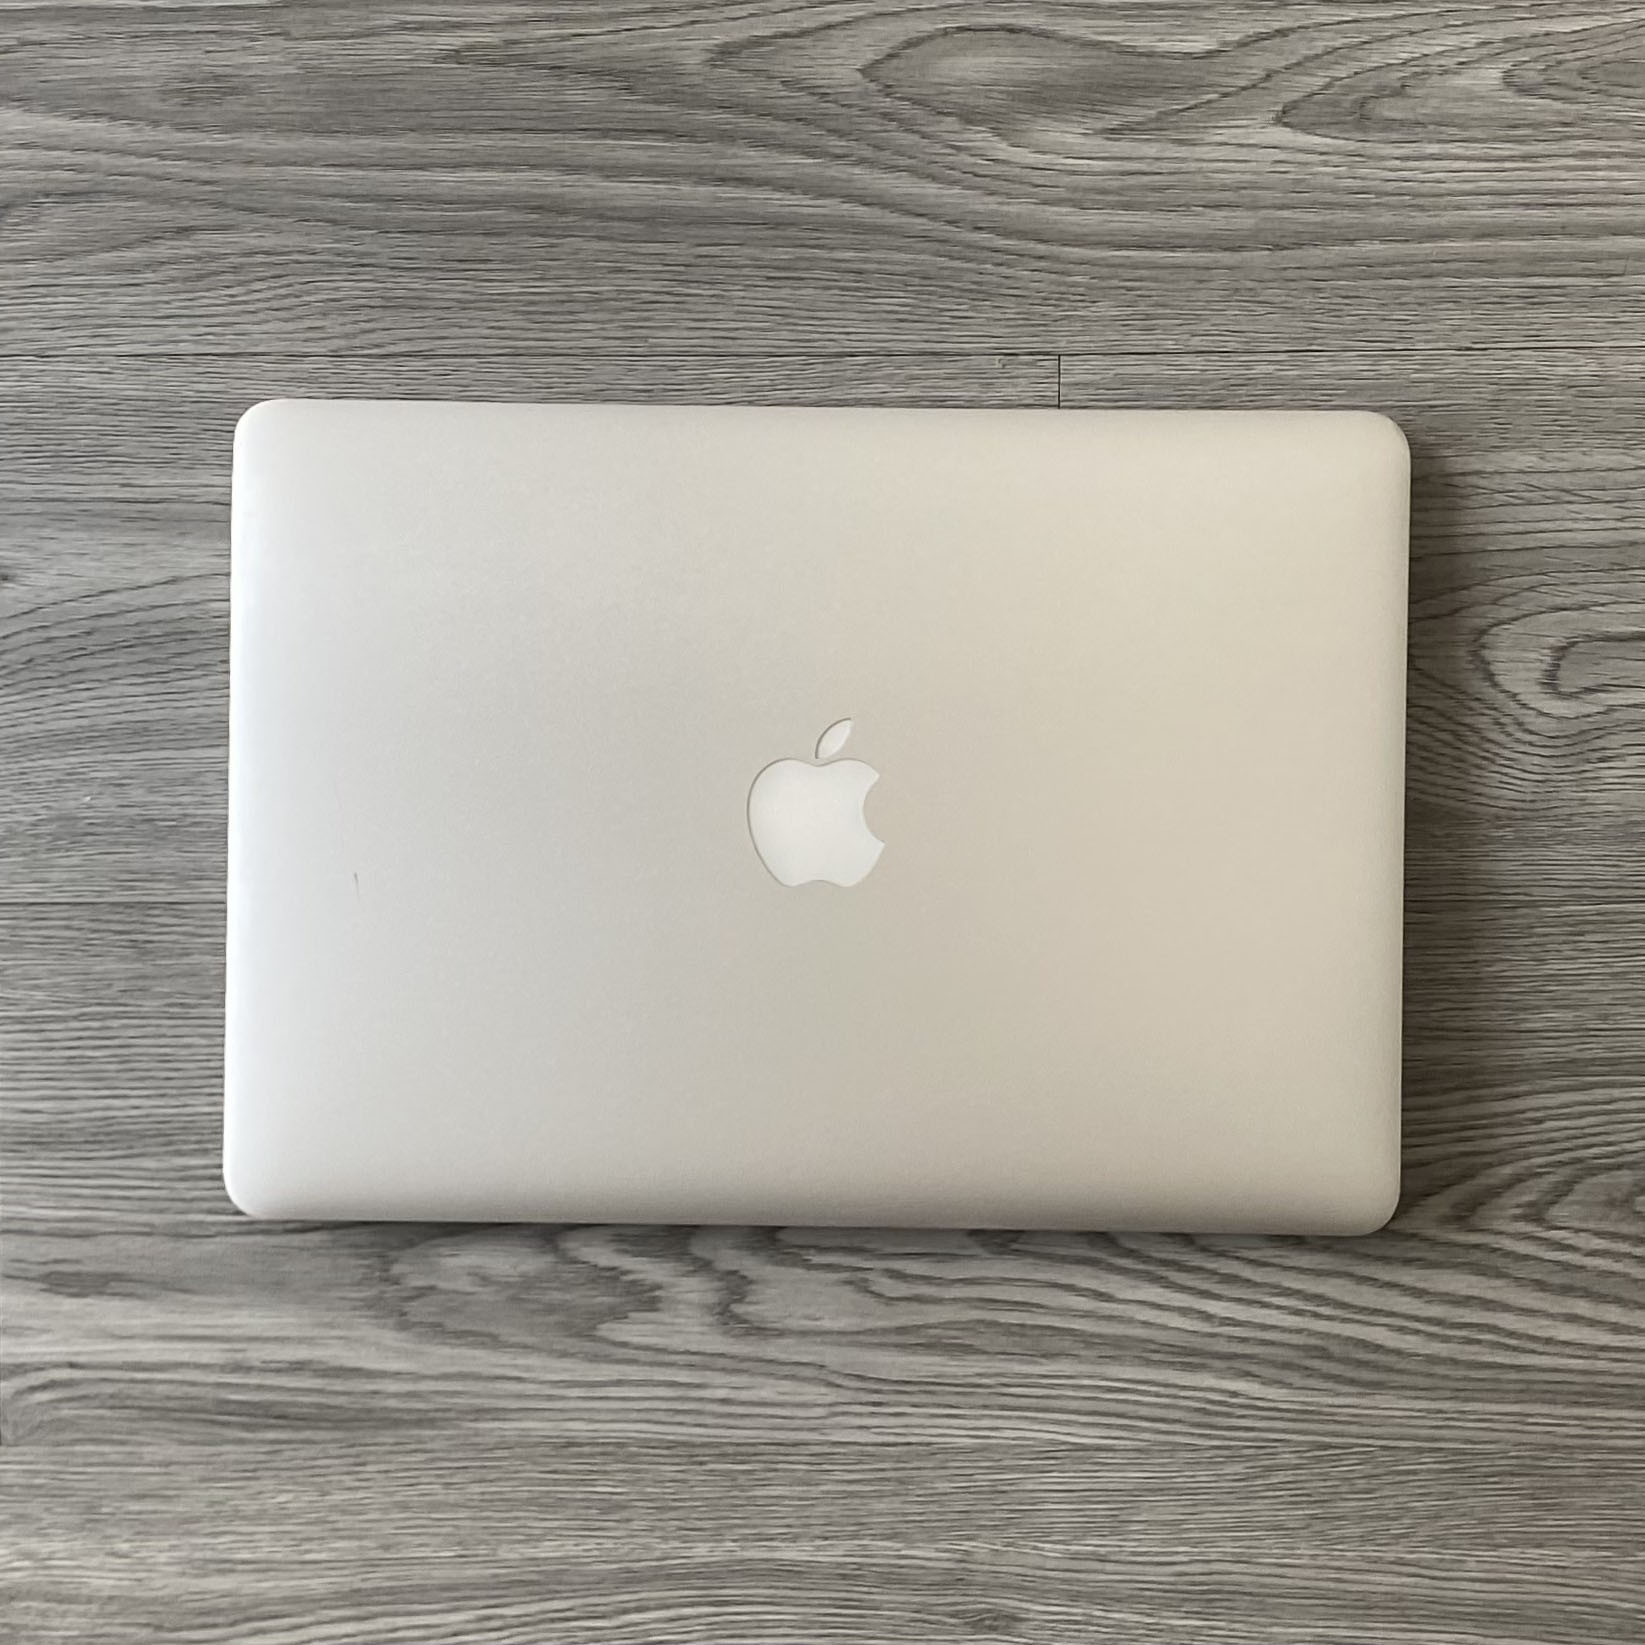 MacBook Air (13-inch, Early 2015) Core i5